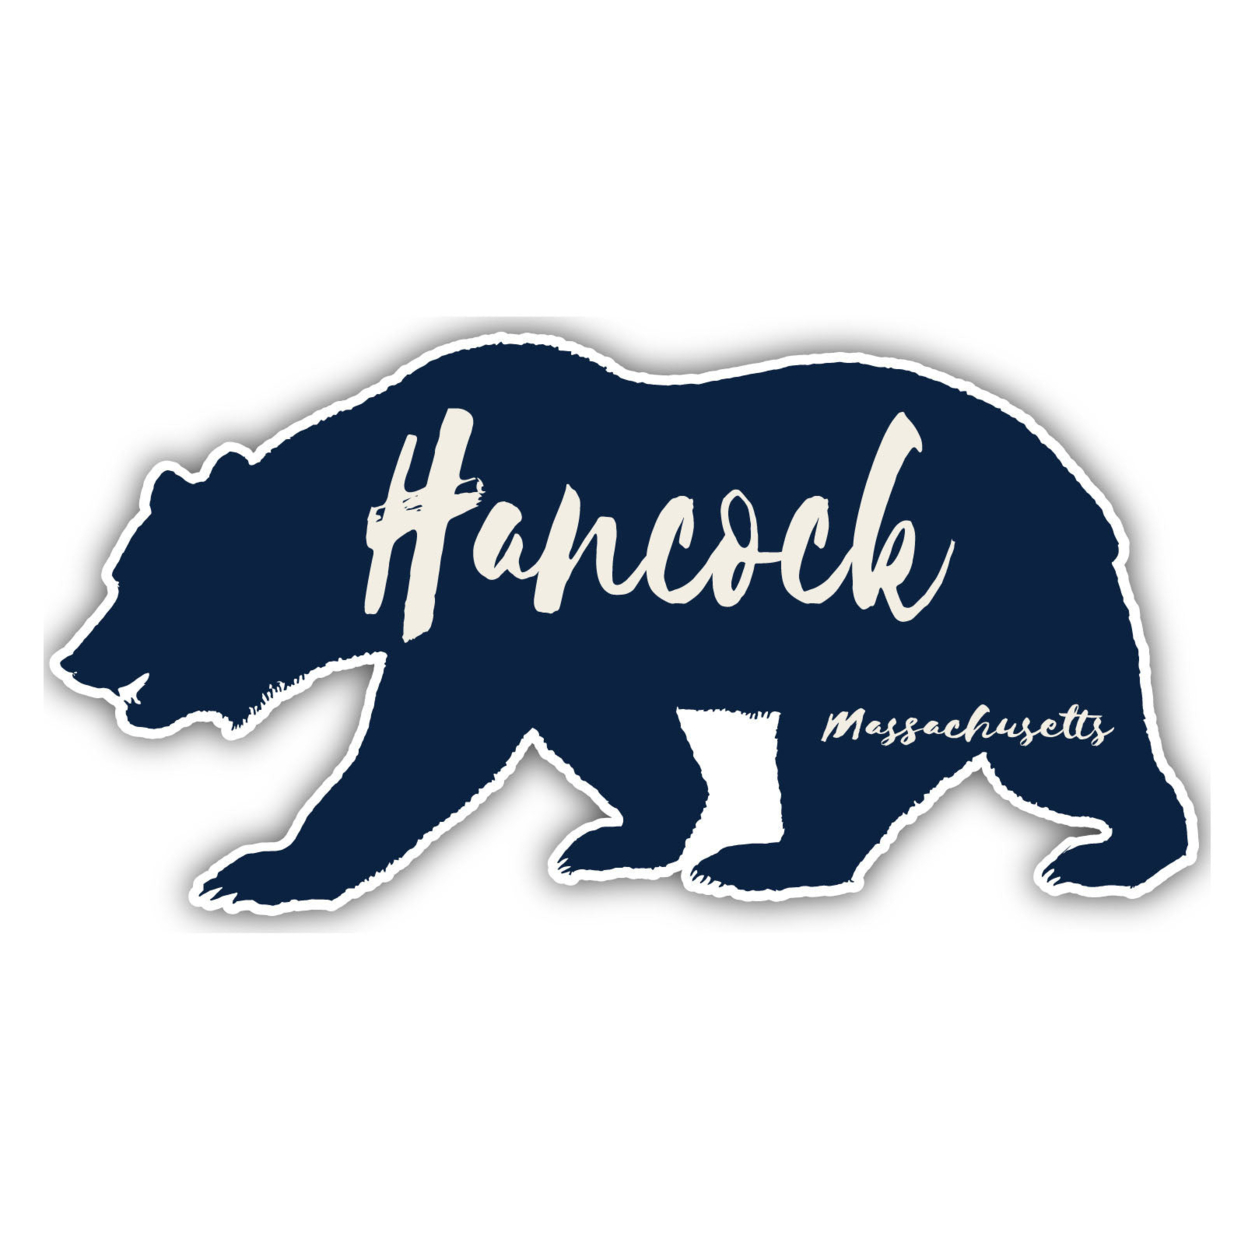 Hancock Massachusetts Souvenir Decorative Stickers (Choose Theme And Size) - Single Unit, 8-Inch, Tent